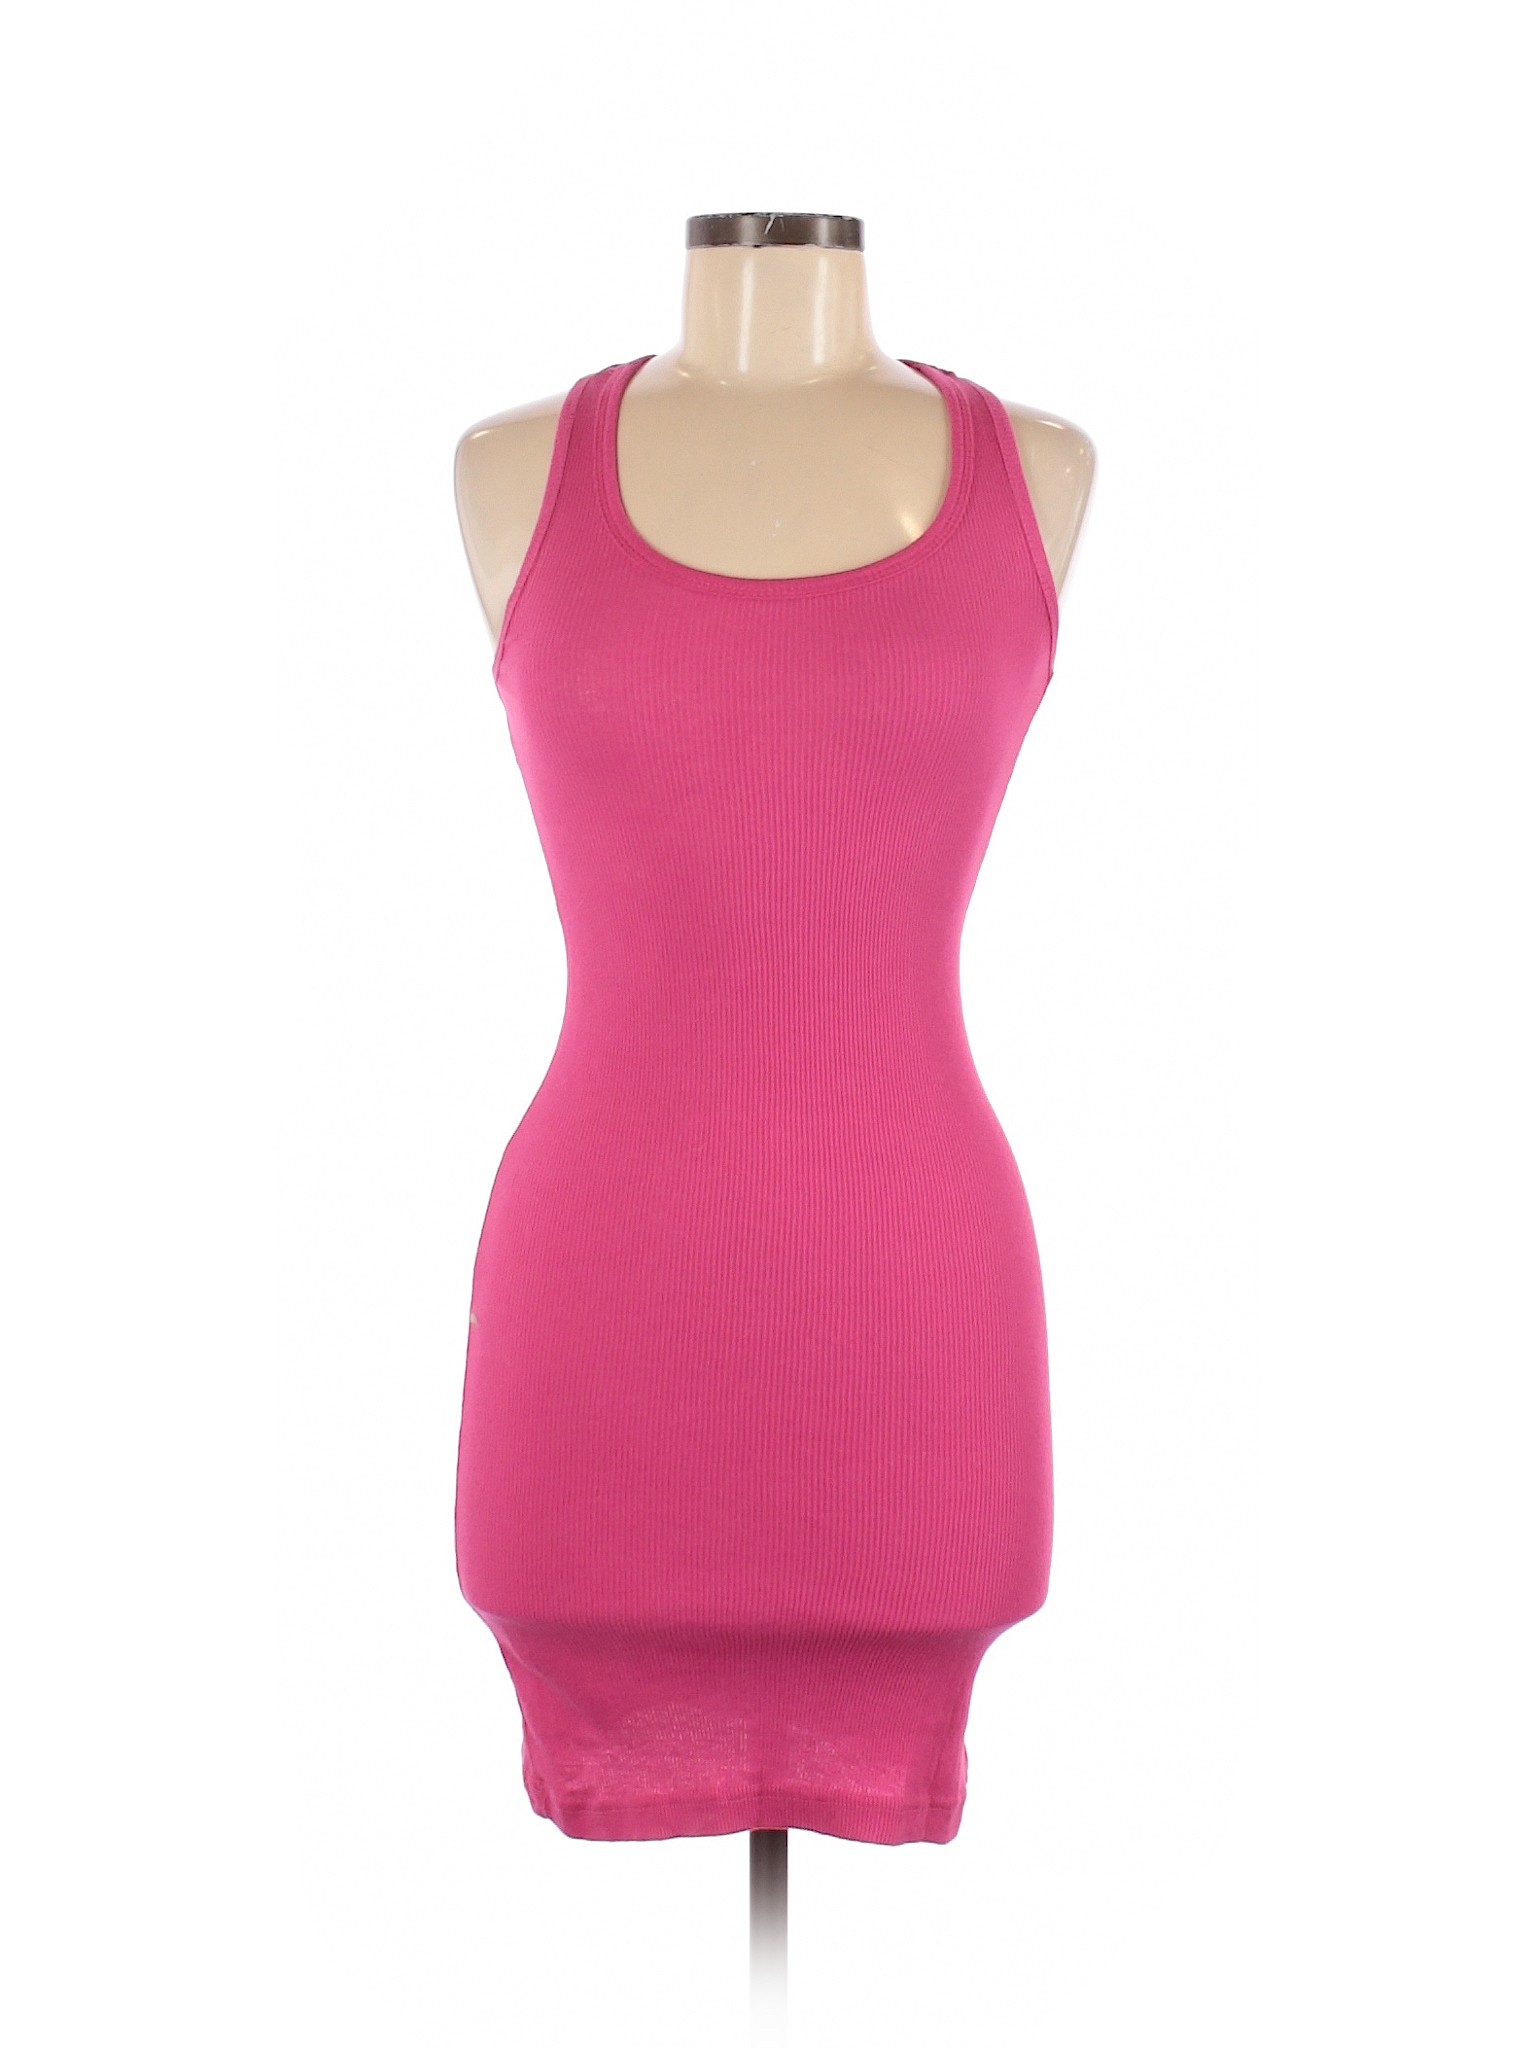 West Loop Women Pink Casual Dress S | eBay